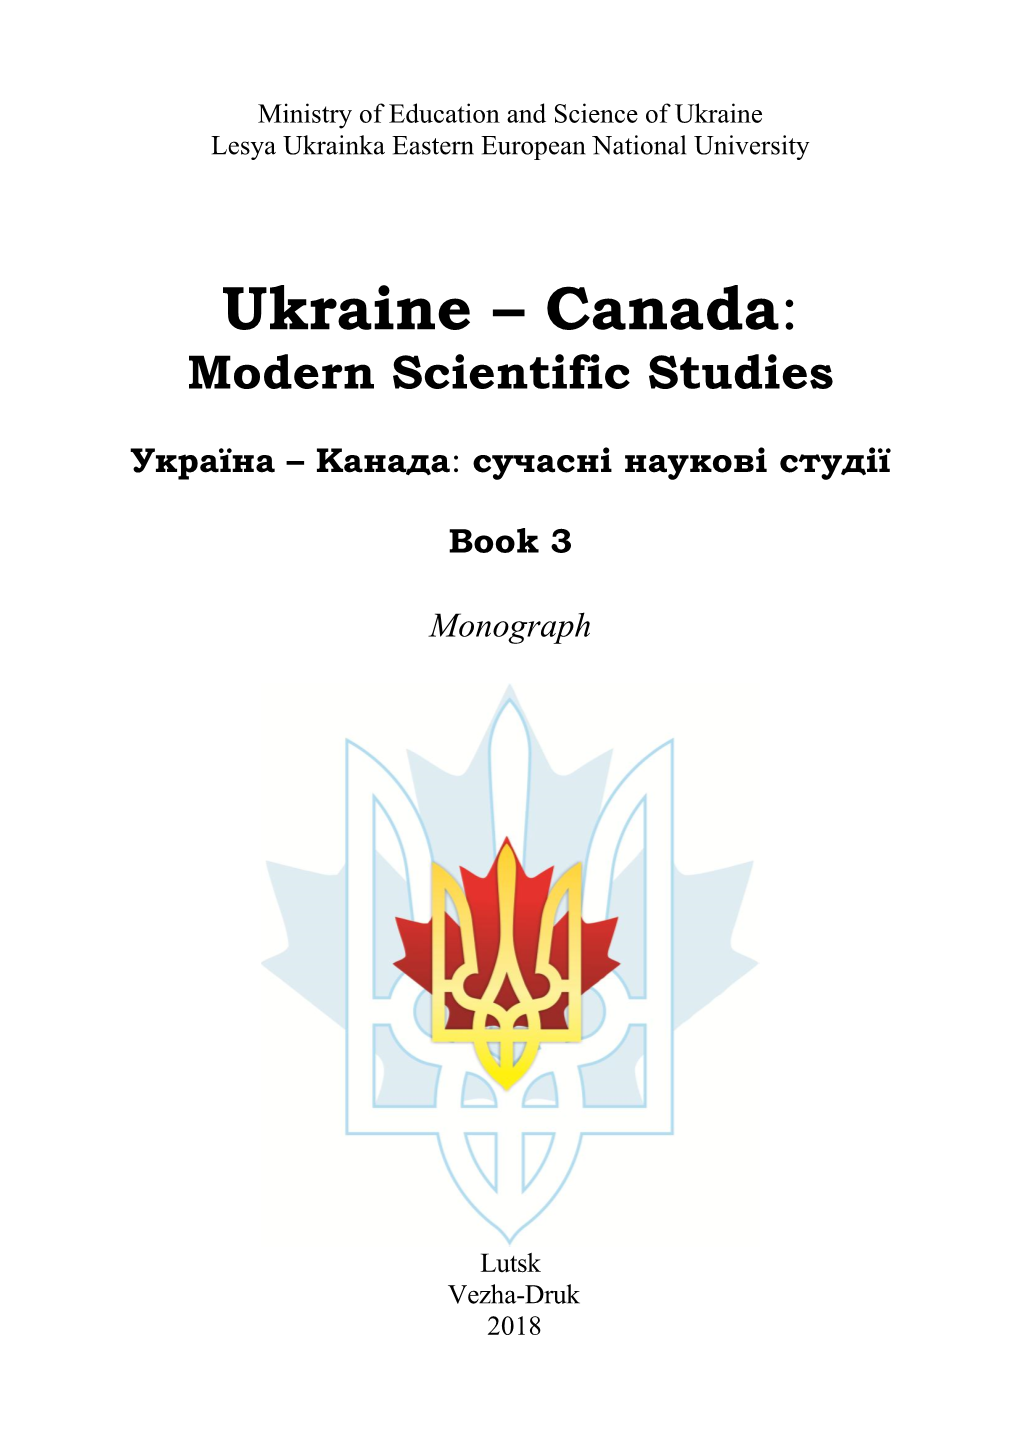 Ukraine – Canada: Modern Scientific Studies